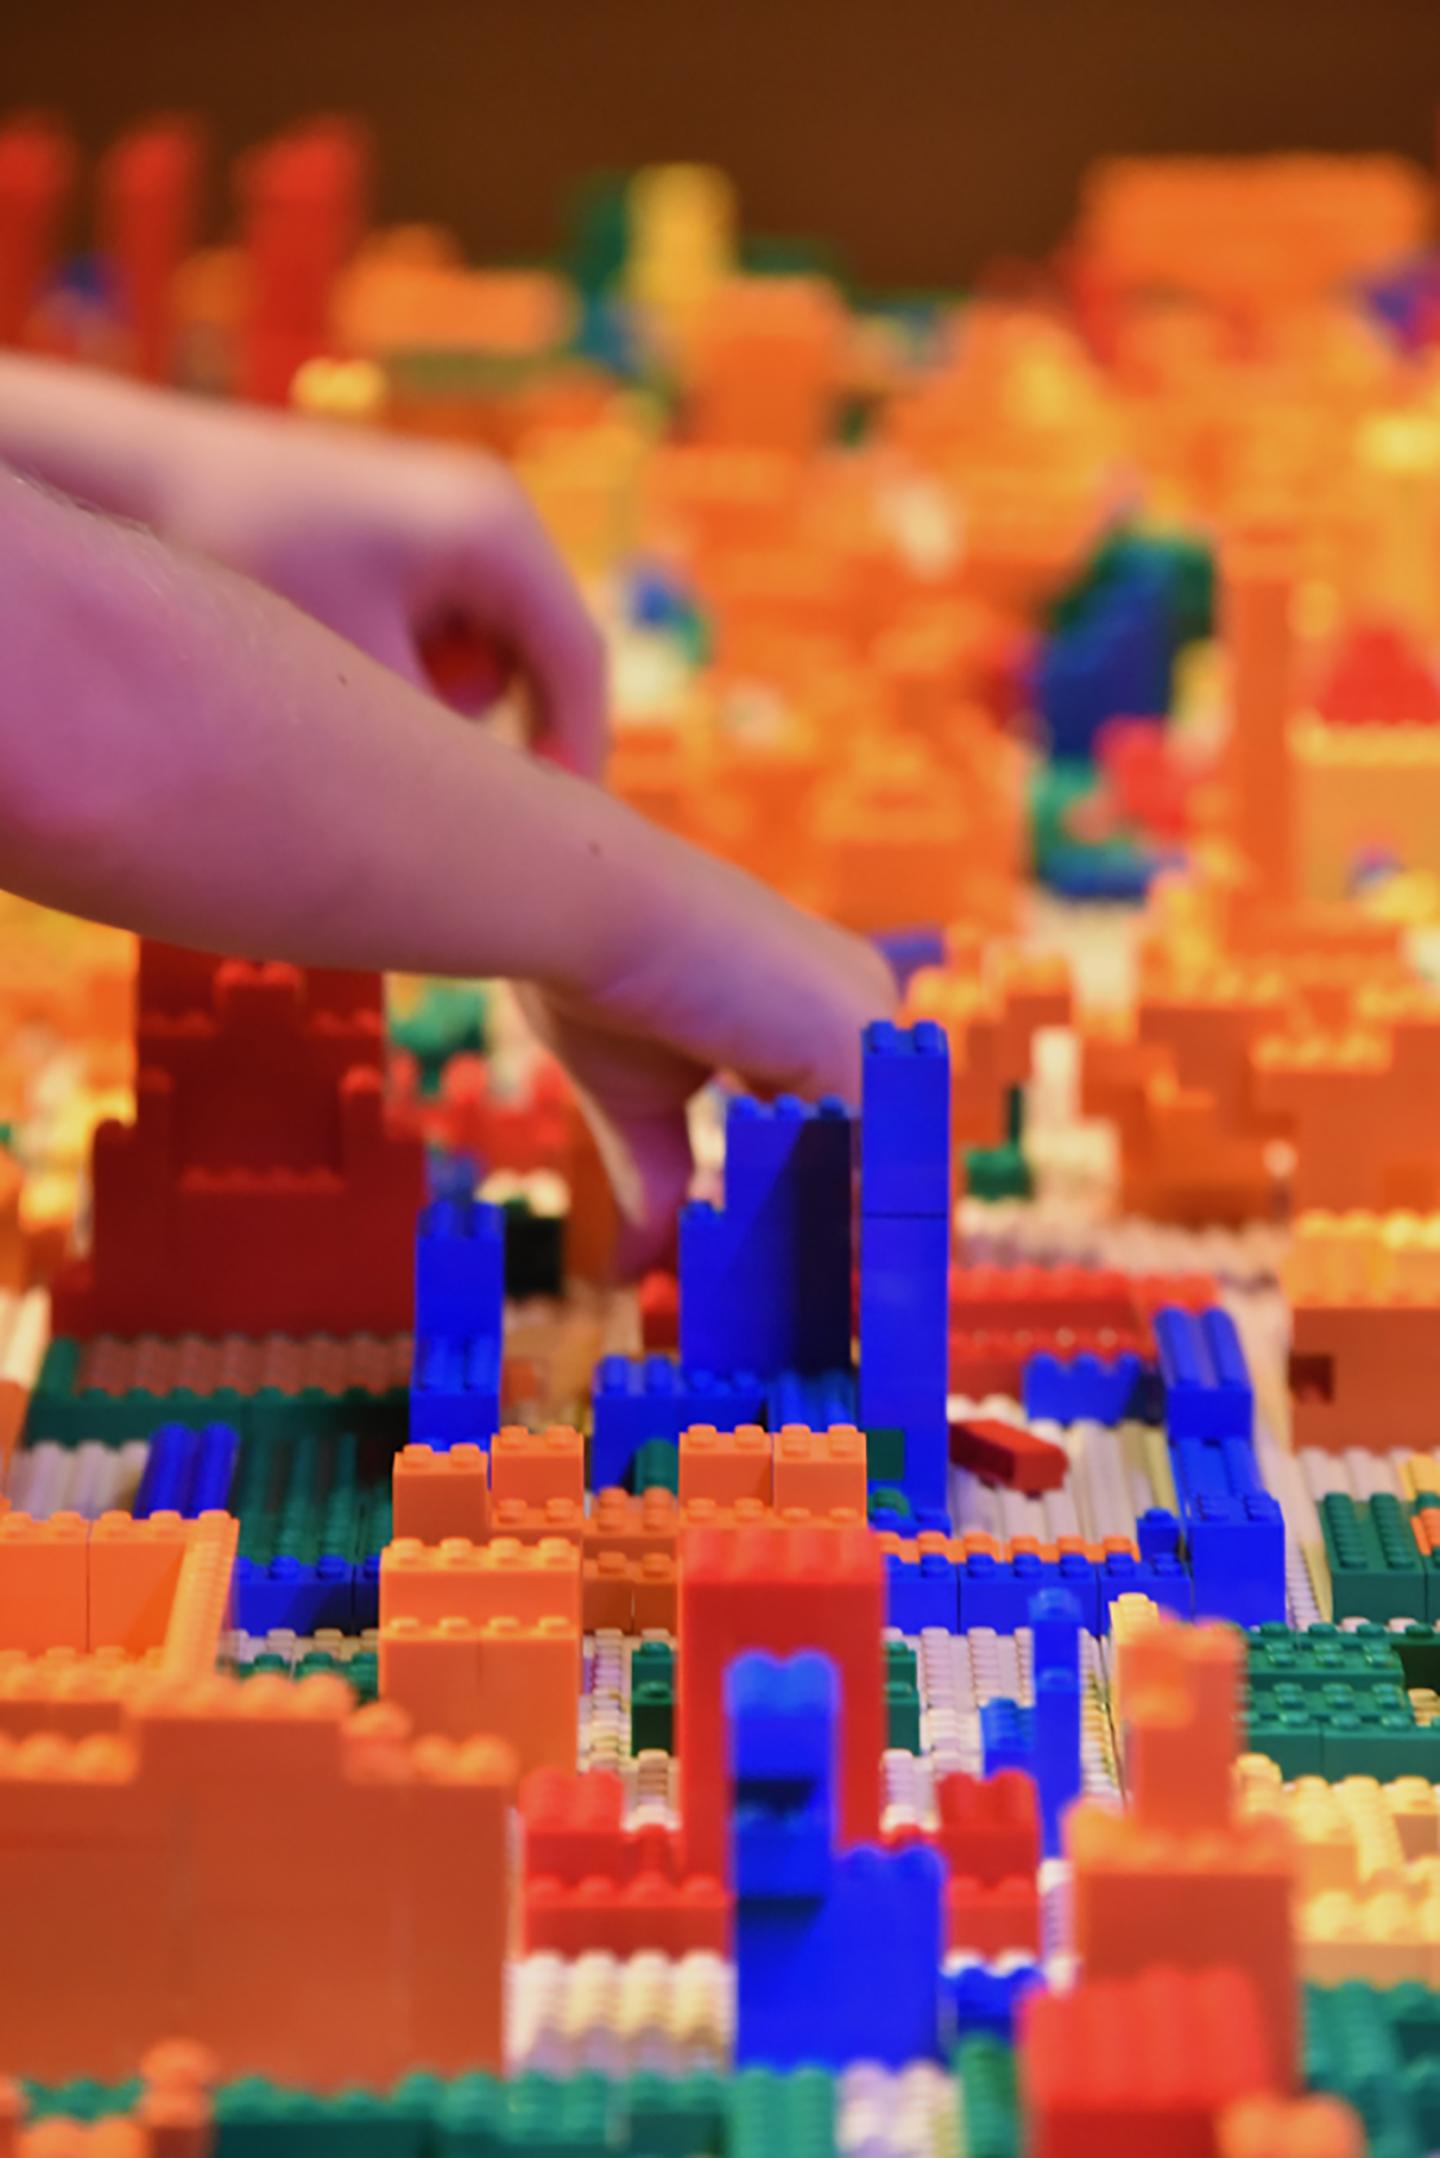 Experiment Participants Contribute to the Development of a LEGO Artwork